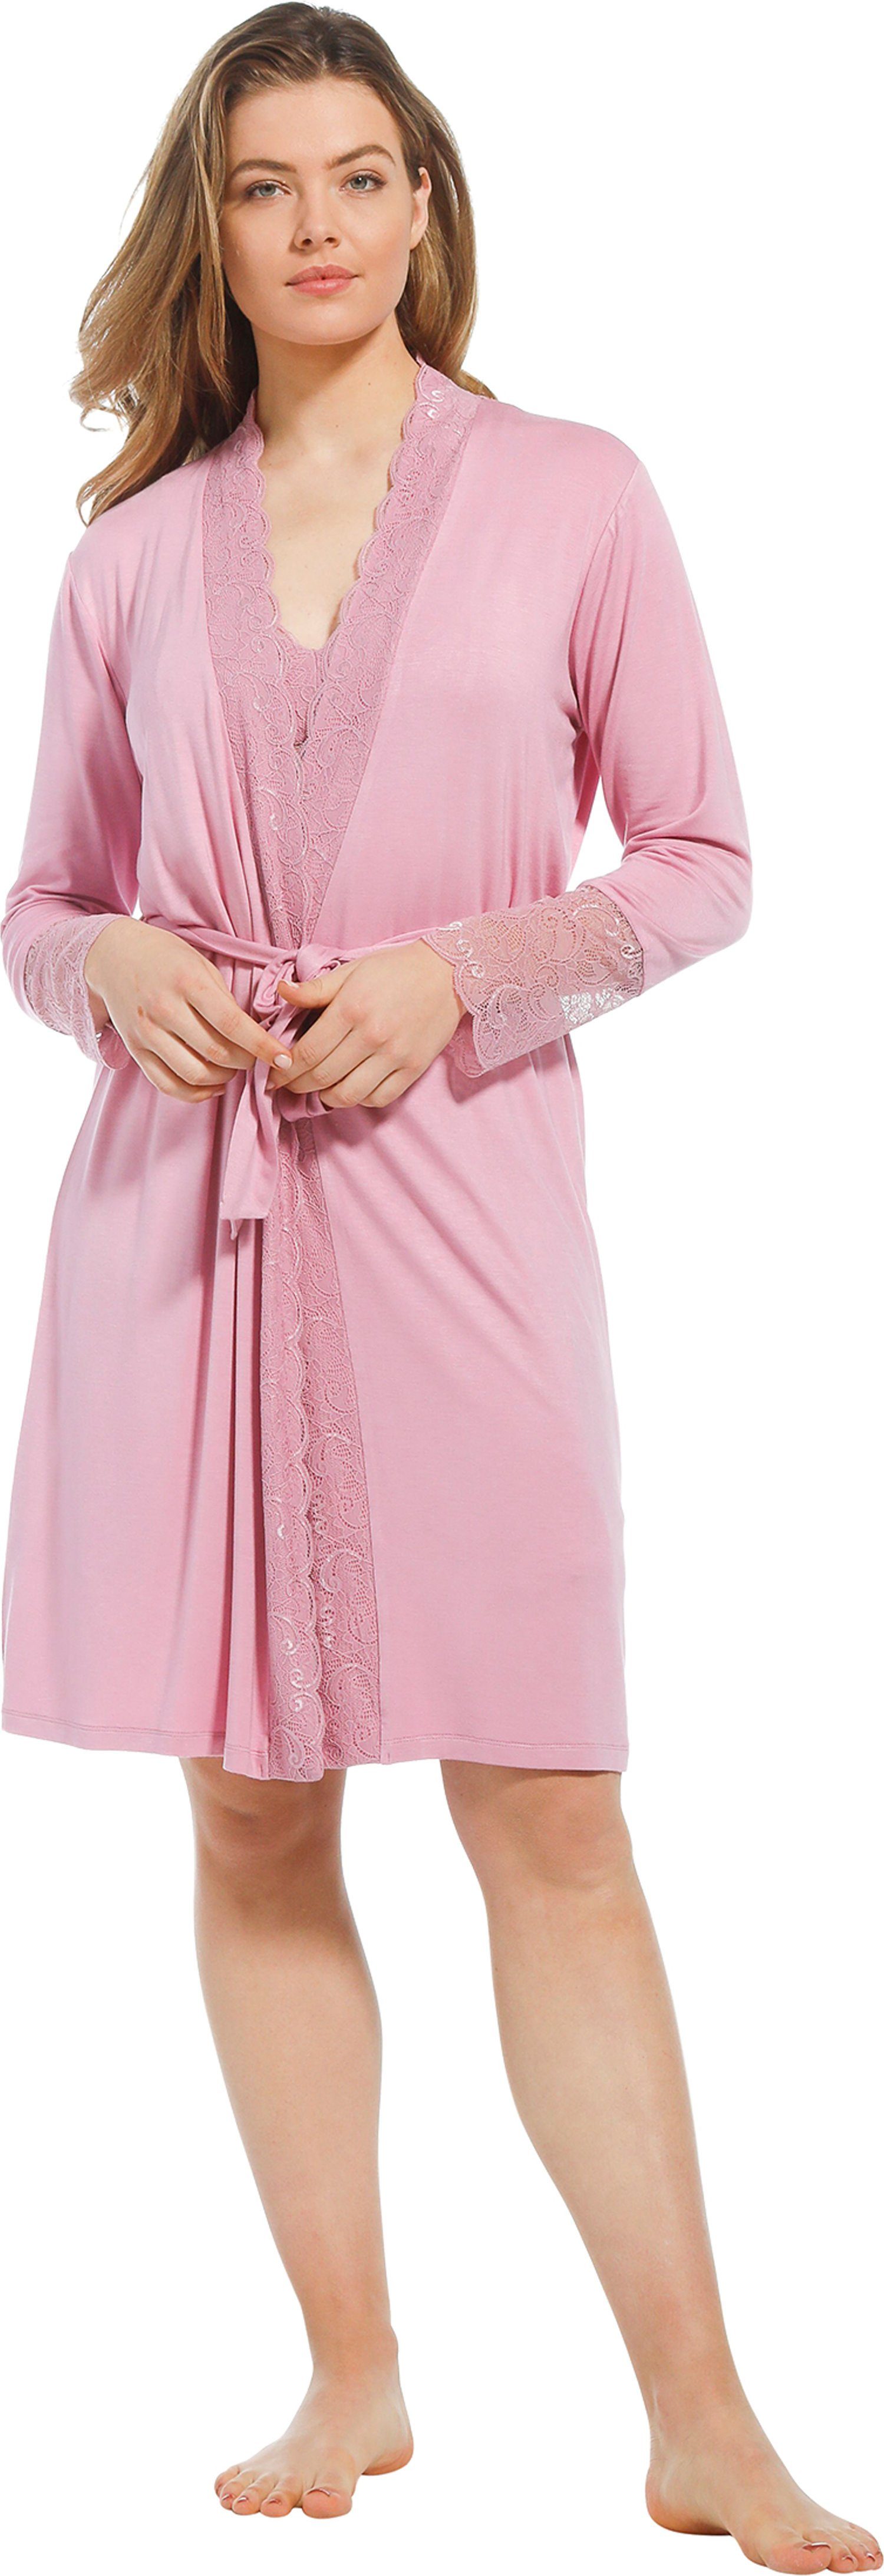 Pastunette Kimono Damen Morgenmantel mit Kimono-Kragen, Spitze, Viskosemischung, Edles Gürtel, pink Design kurz, light